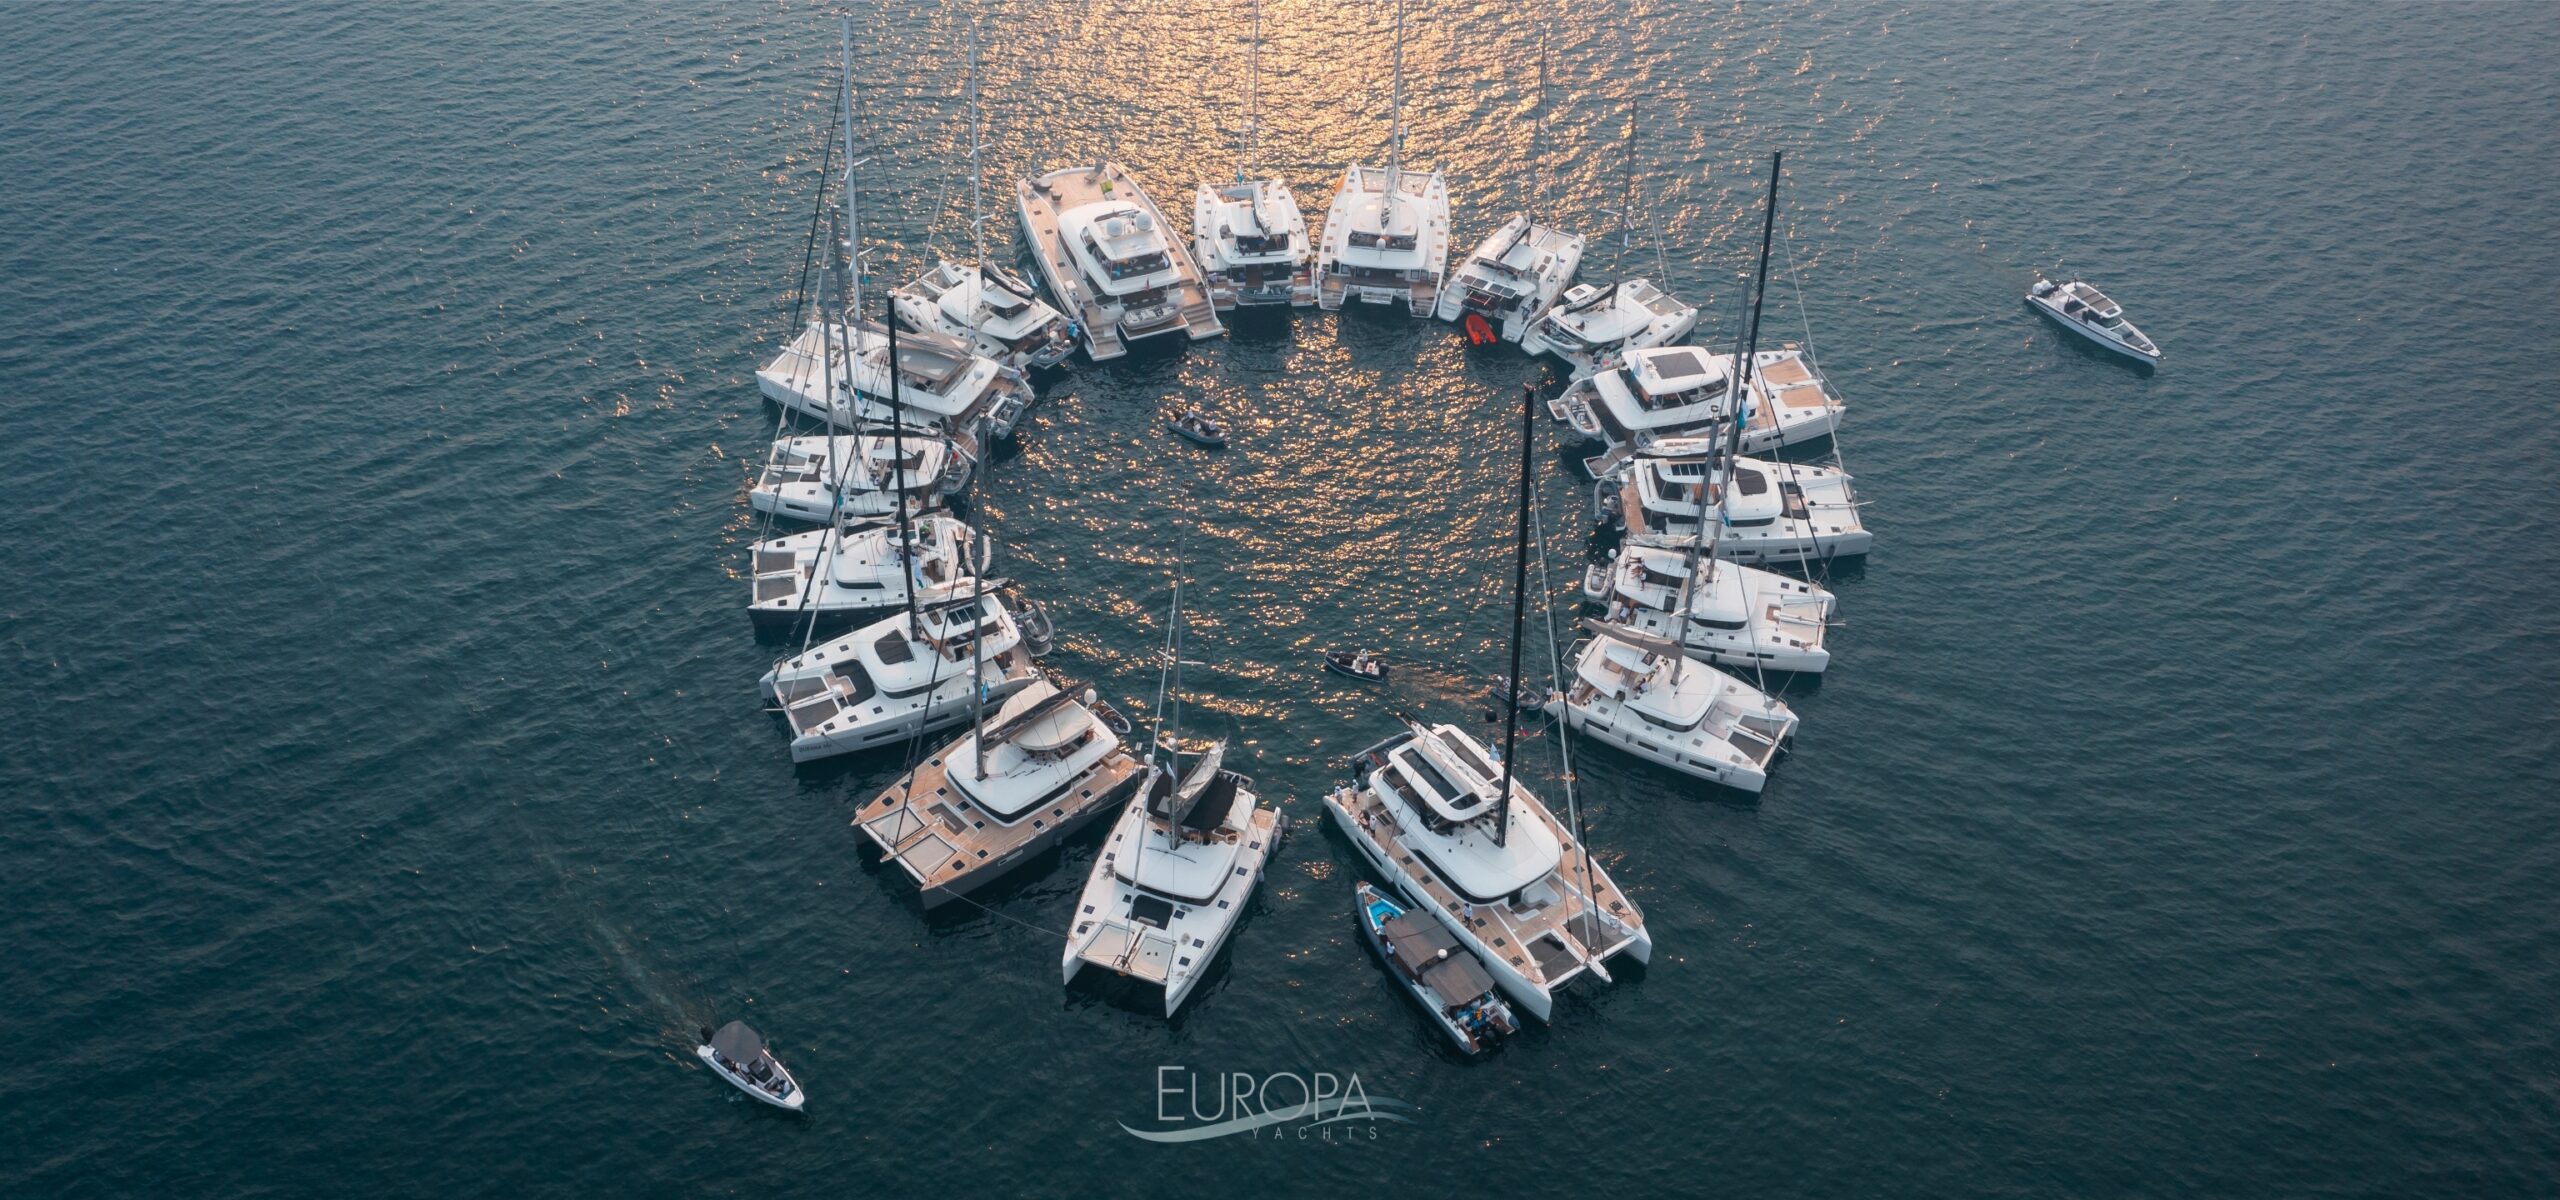 Europa Yachts Joins Global Celebration of Lagoon Catamaran’s 40th Anniversary with Lagoon World Escapade Philippines